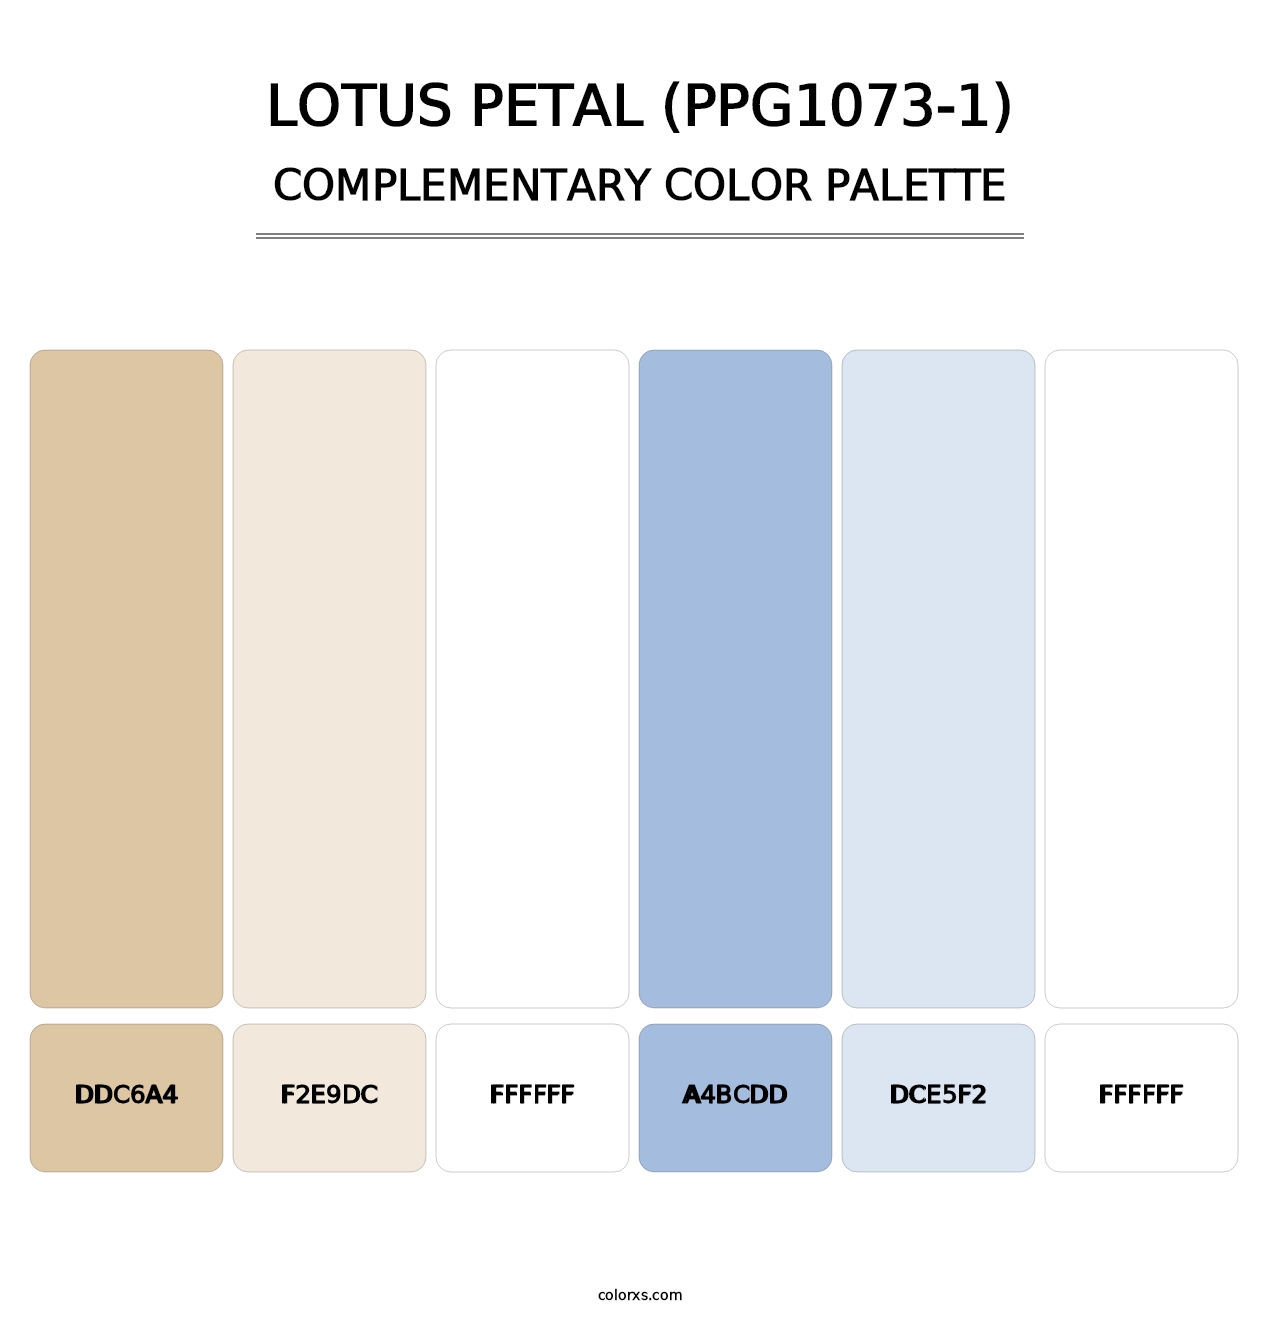 Lotus Petal (PPG1073-1) - Complementary Color Palette